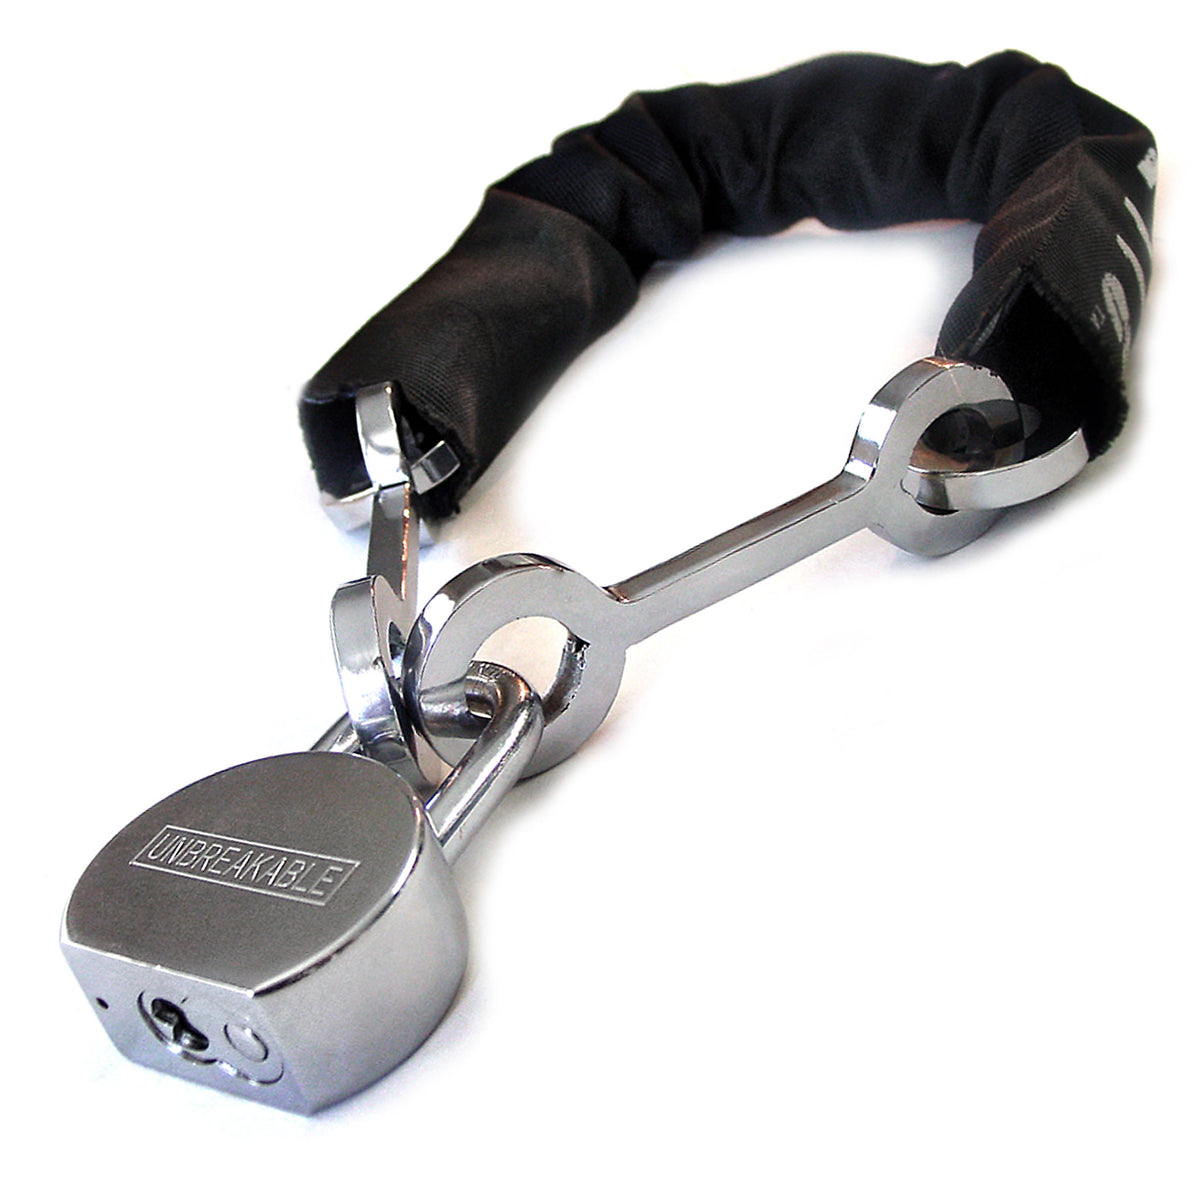 ArmorLite (Model #2110-36" Chain)